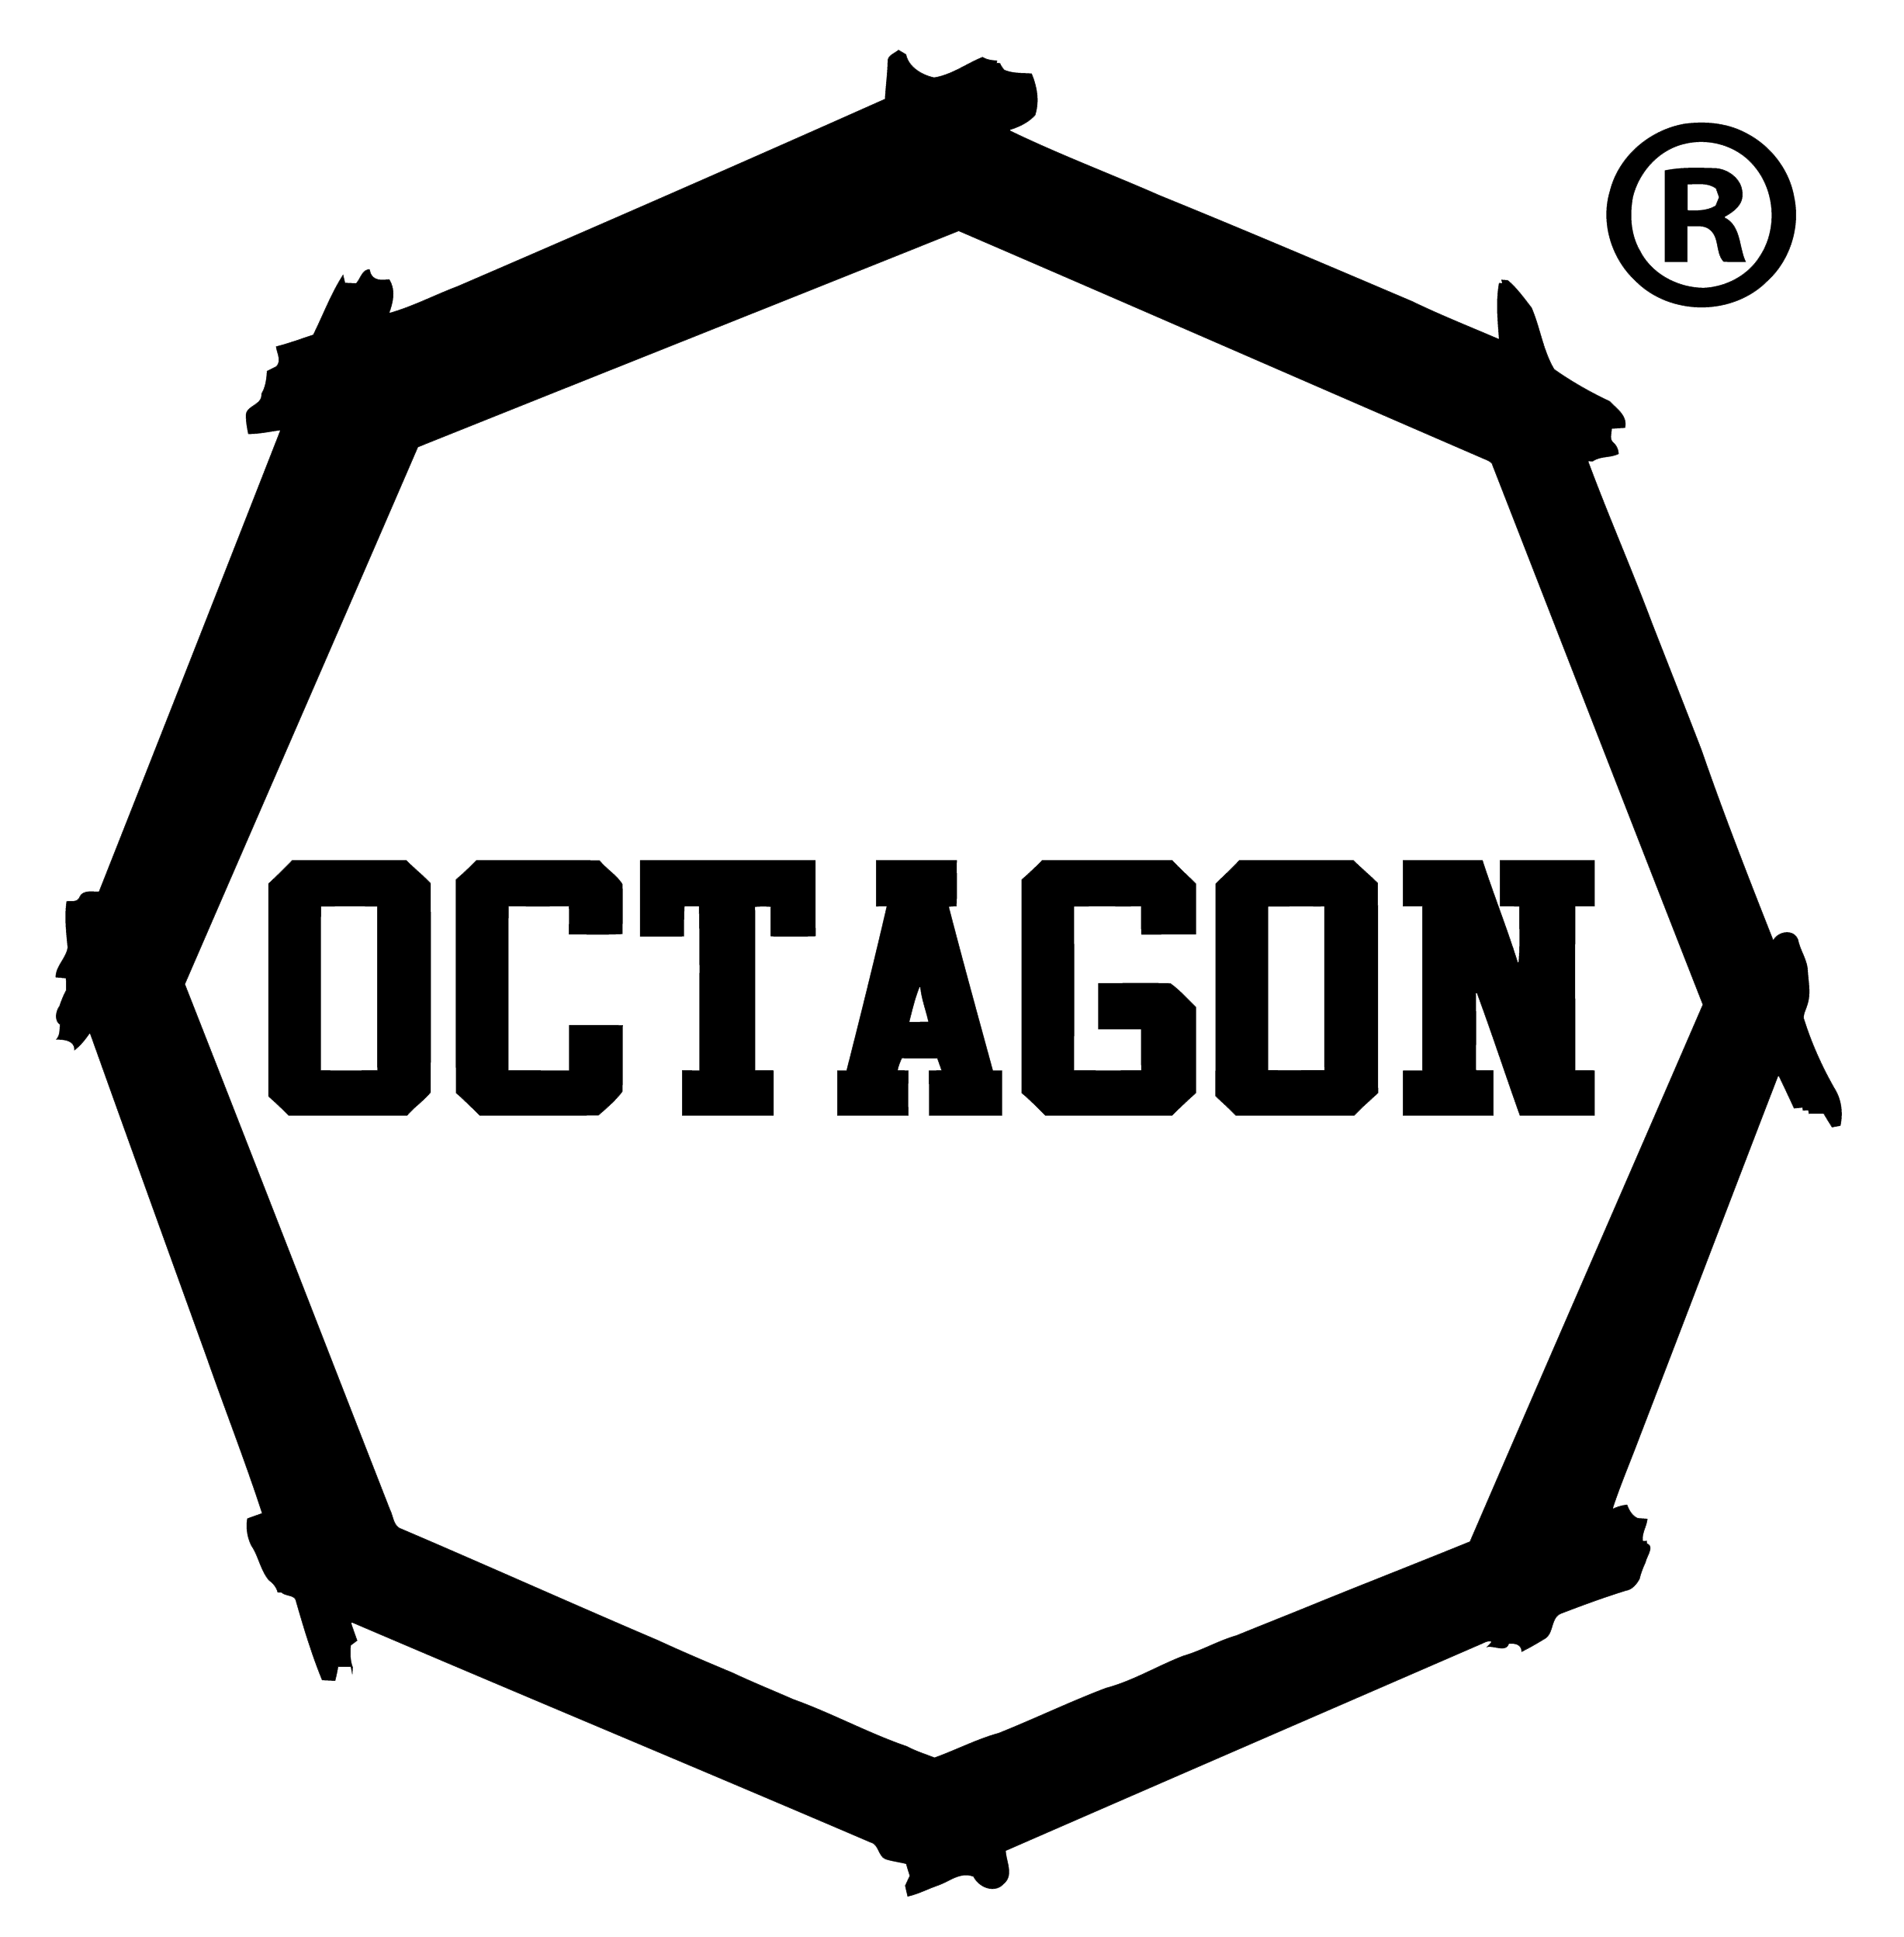 Logo Octagon